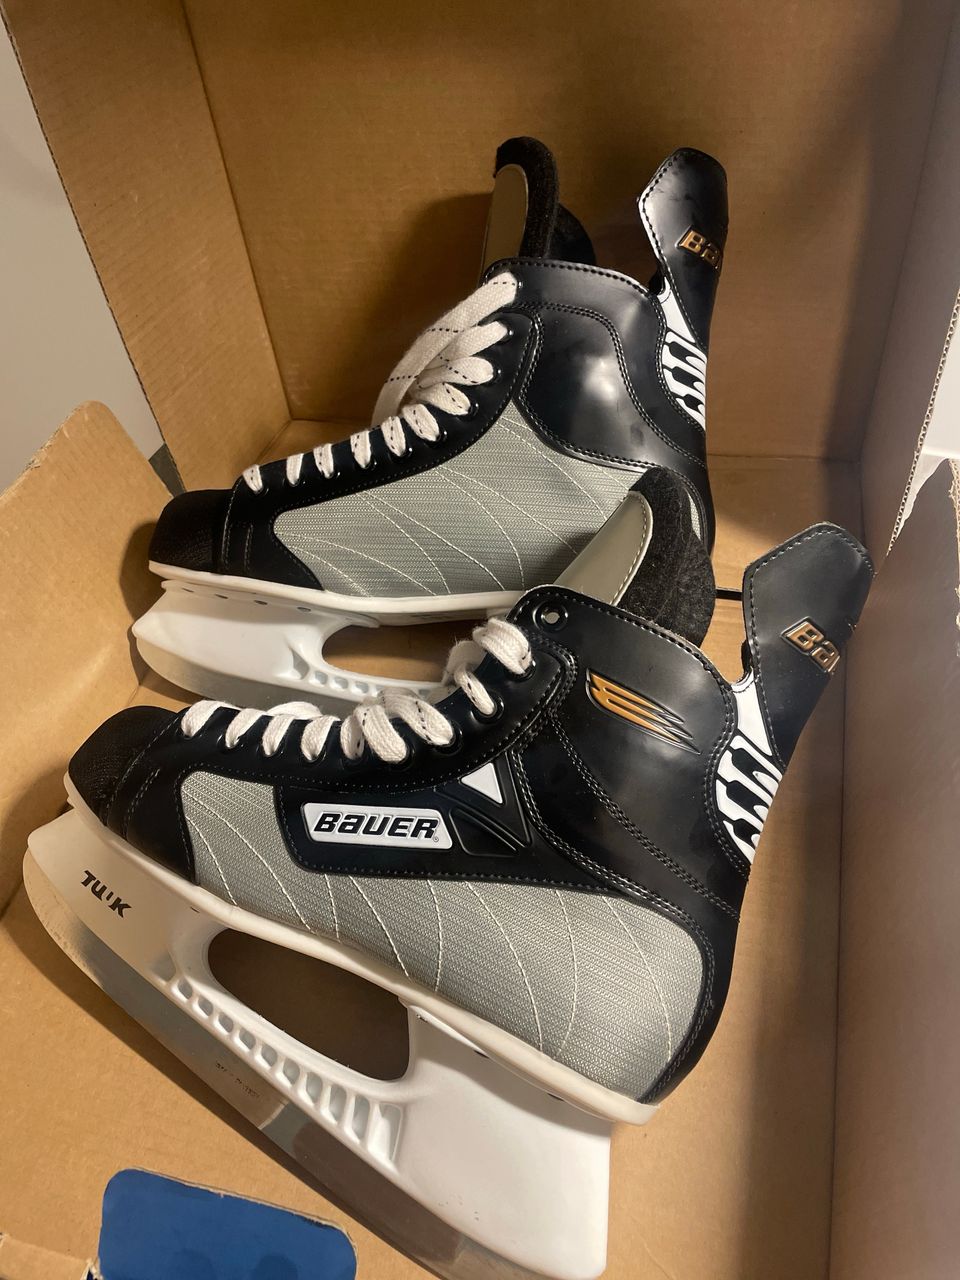 Brand New Bauer Ice Skates